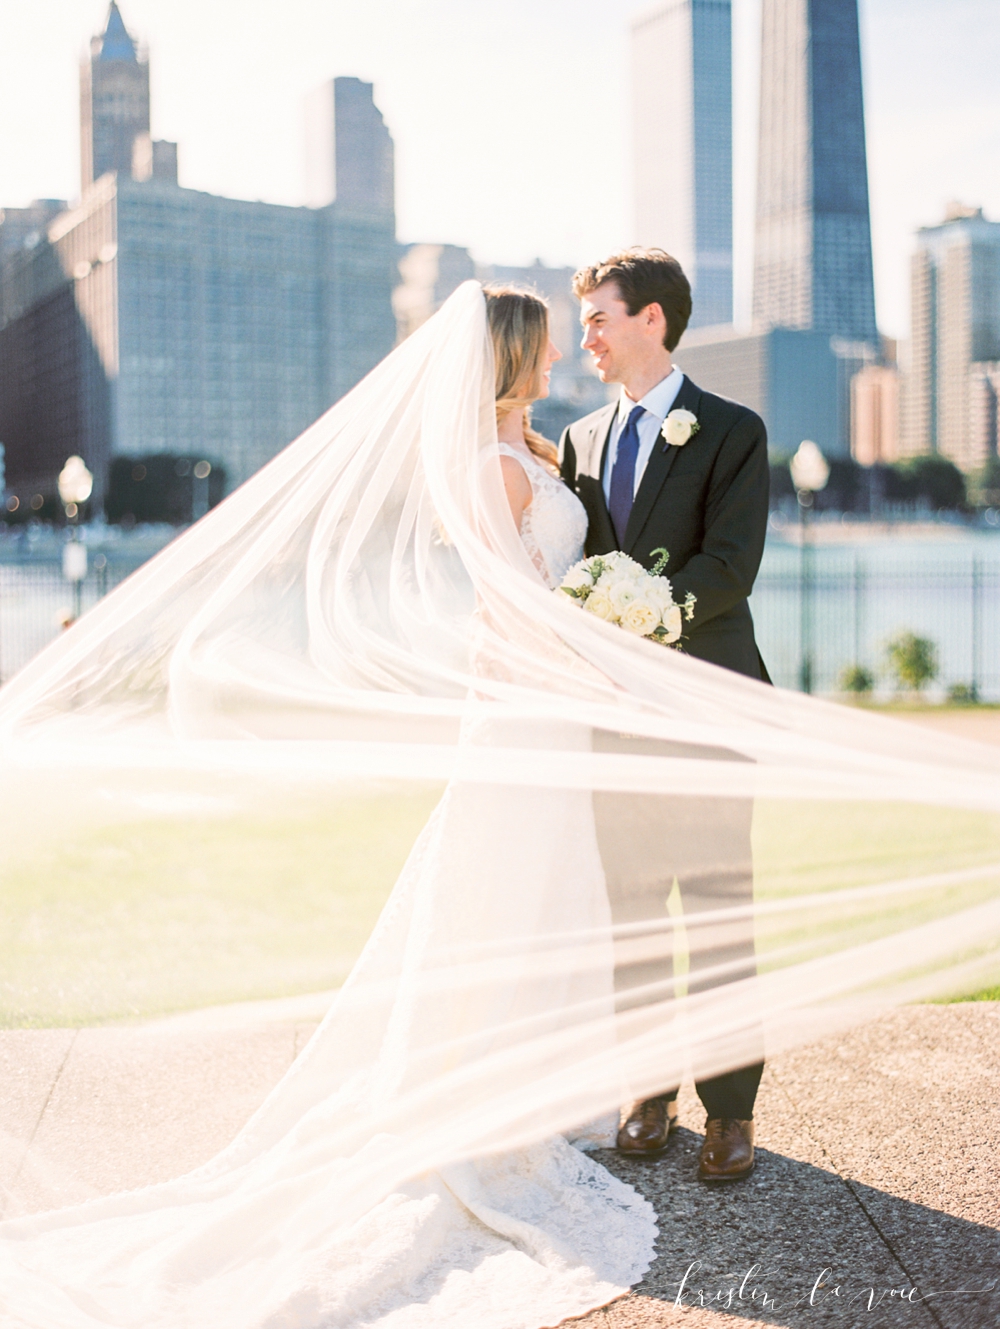  Lauren + Brendan | Chicago wedding | Liancarlo 5802 from Little White Dress Bridal Shop in Denver | Kristin La Voie photography 